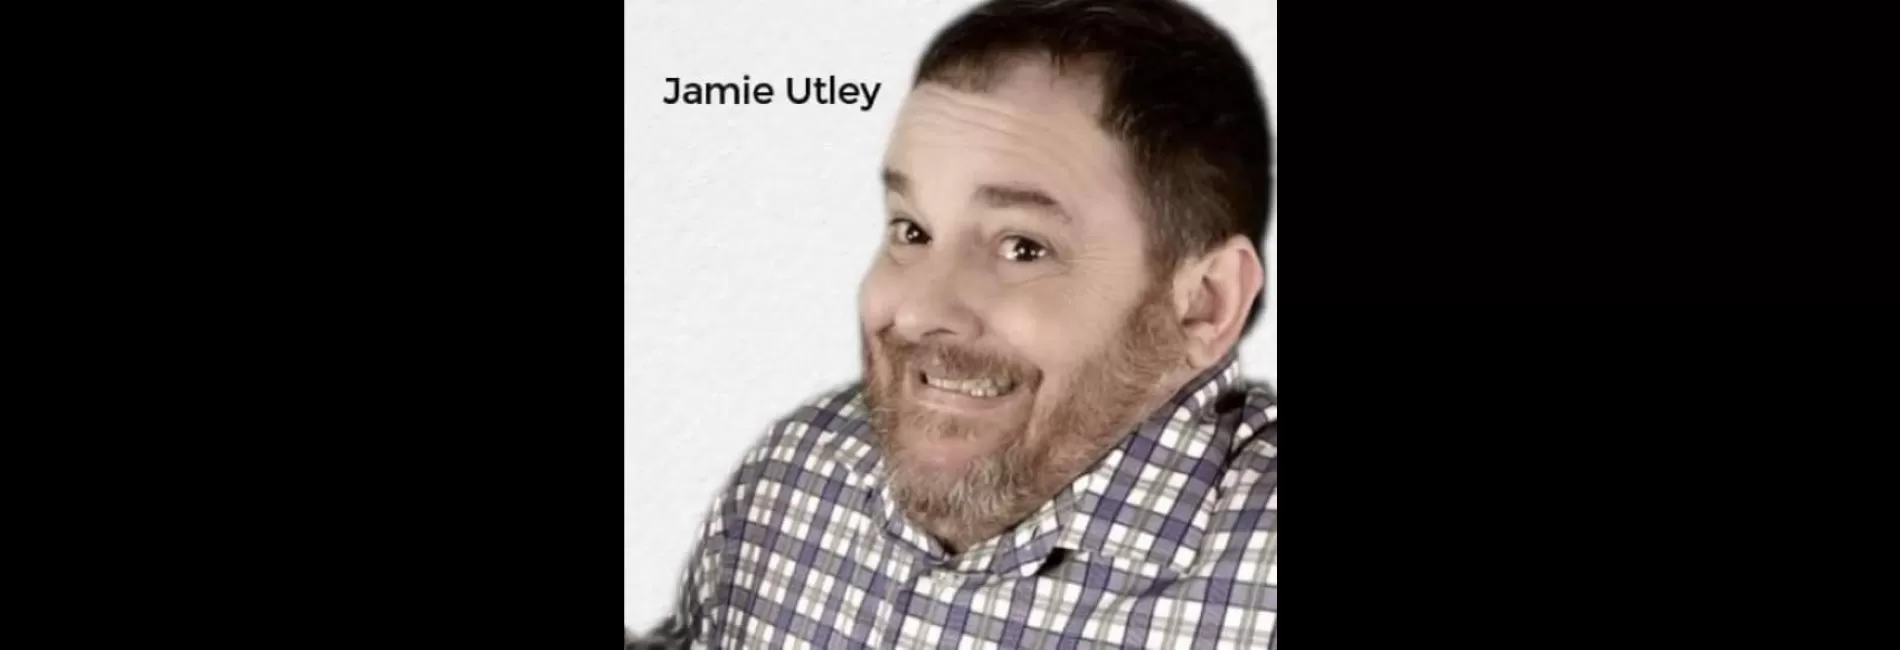 Jamie Utley